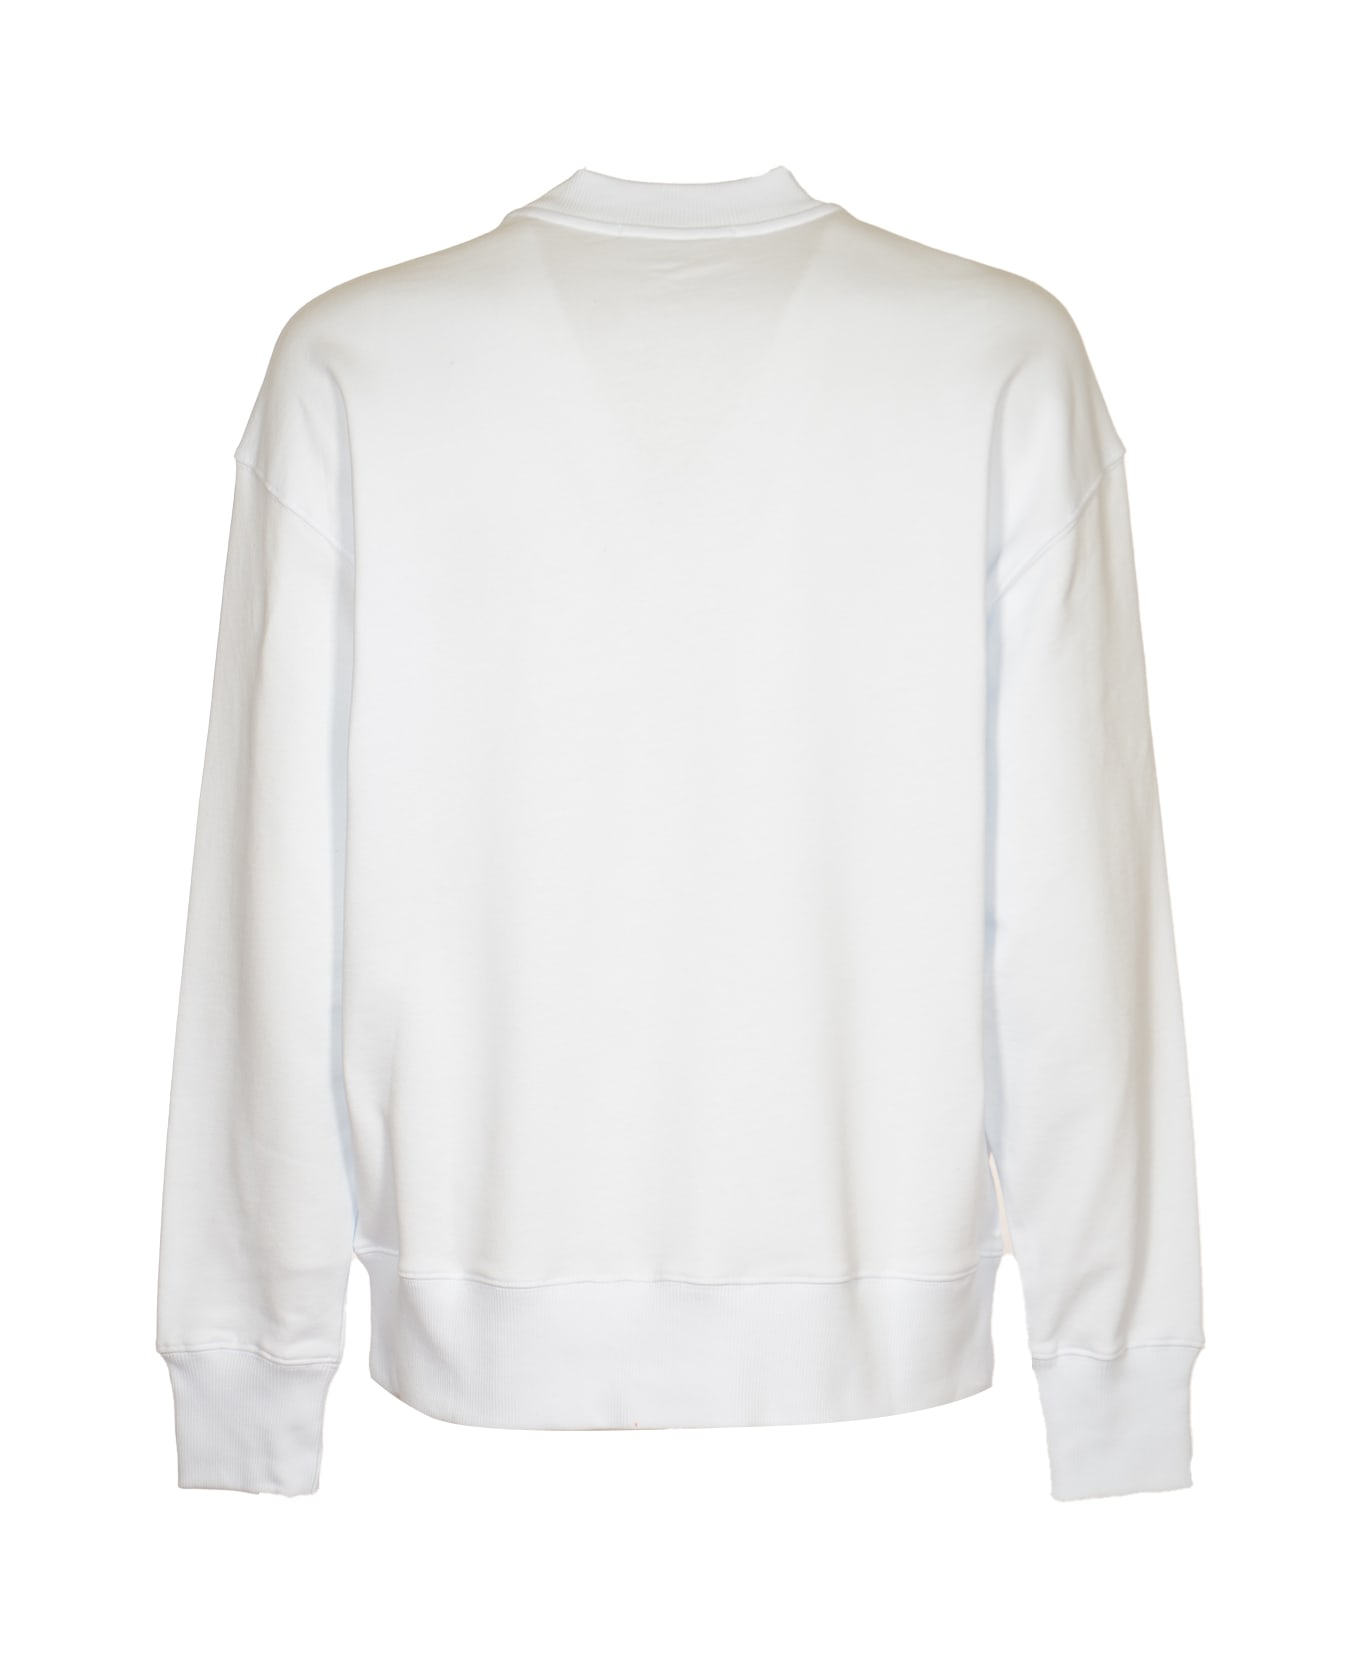 MSGM Logo Neck Sweater - Optical White